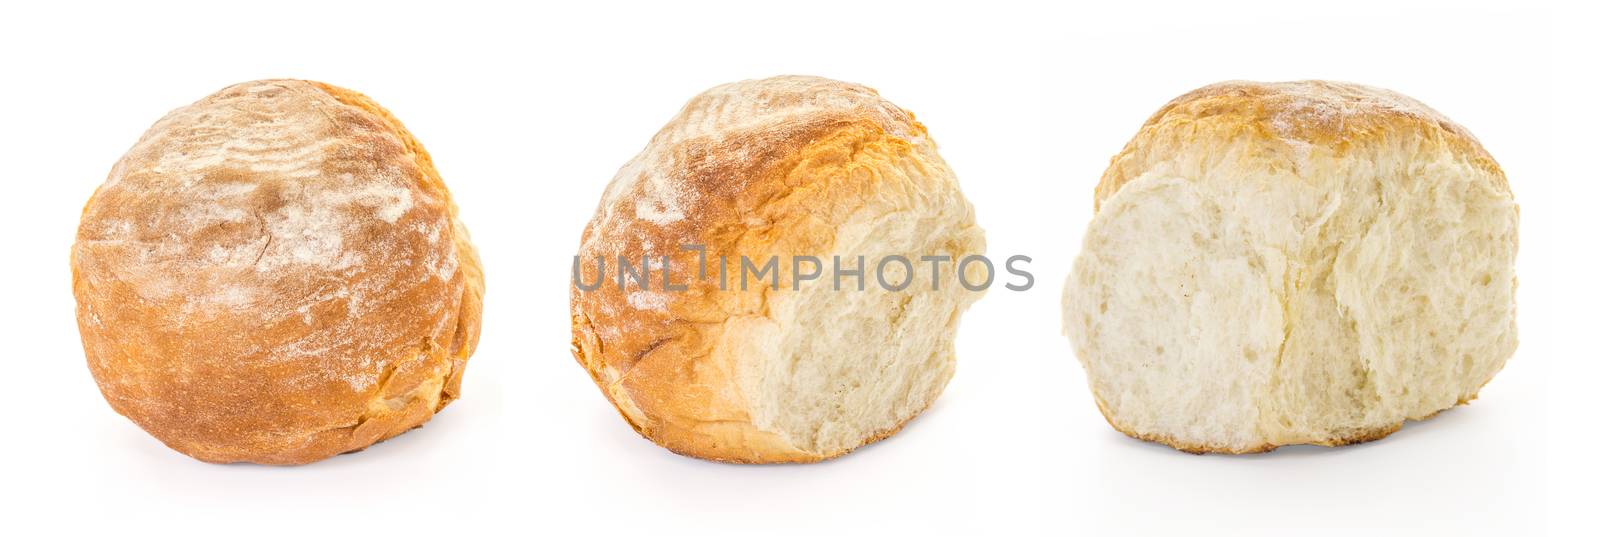 Bread Bun variations by milinz